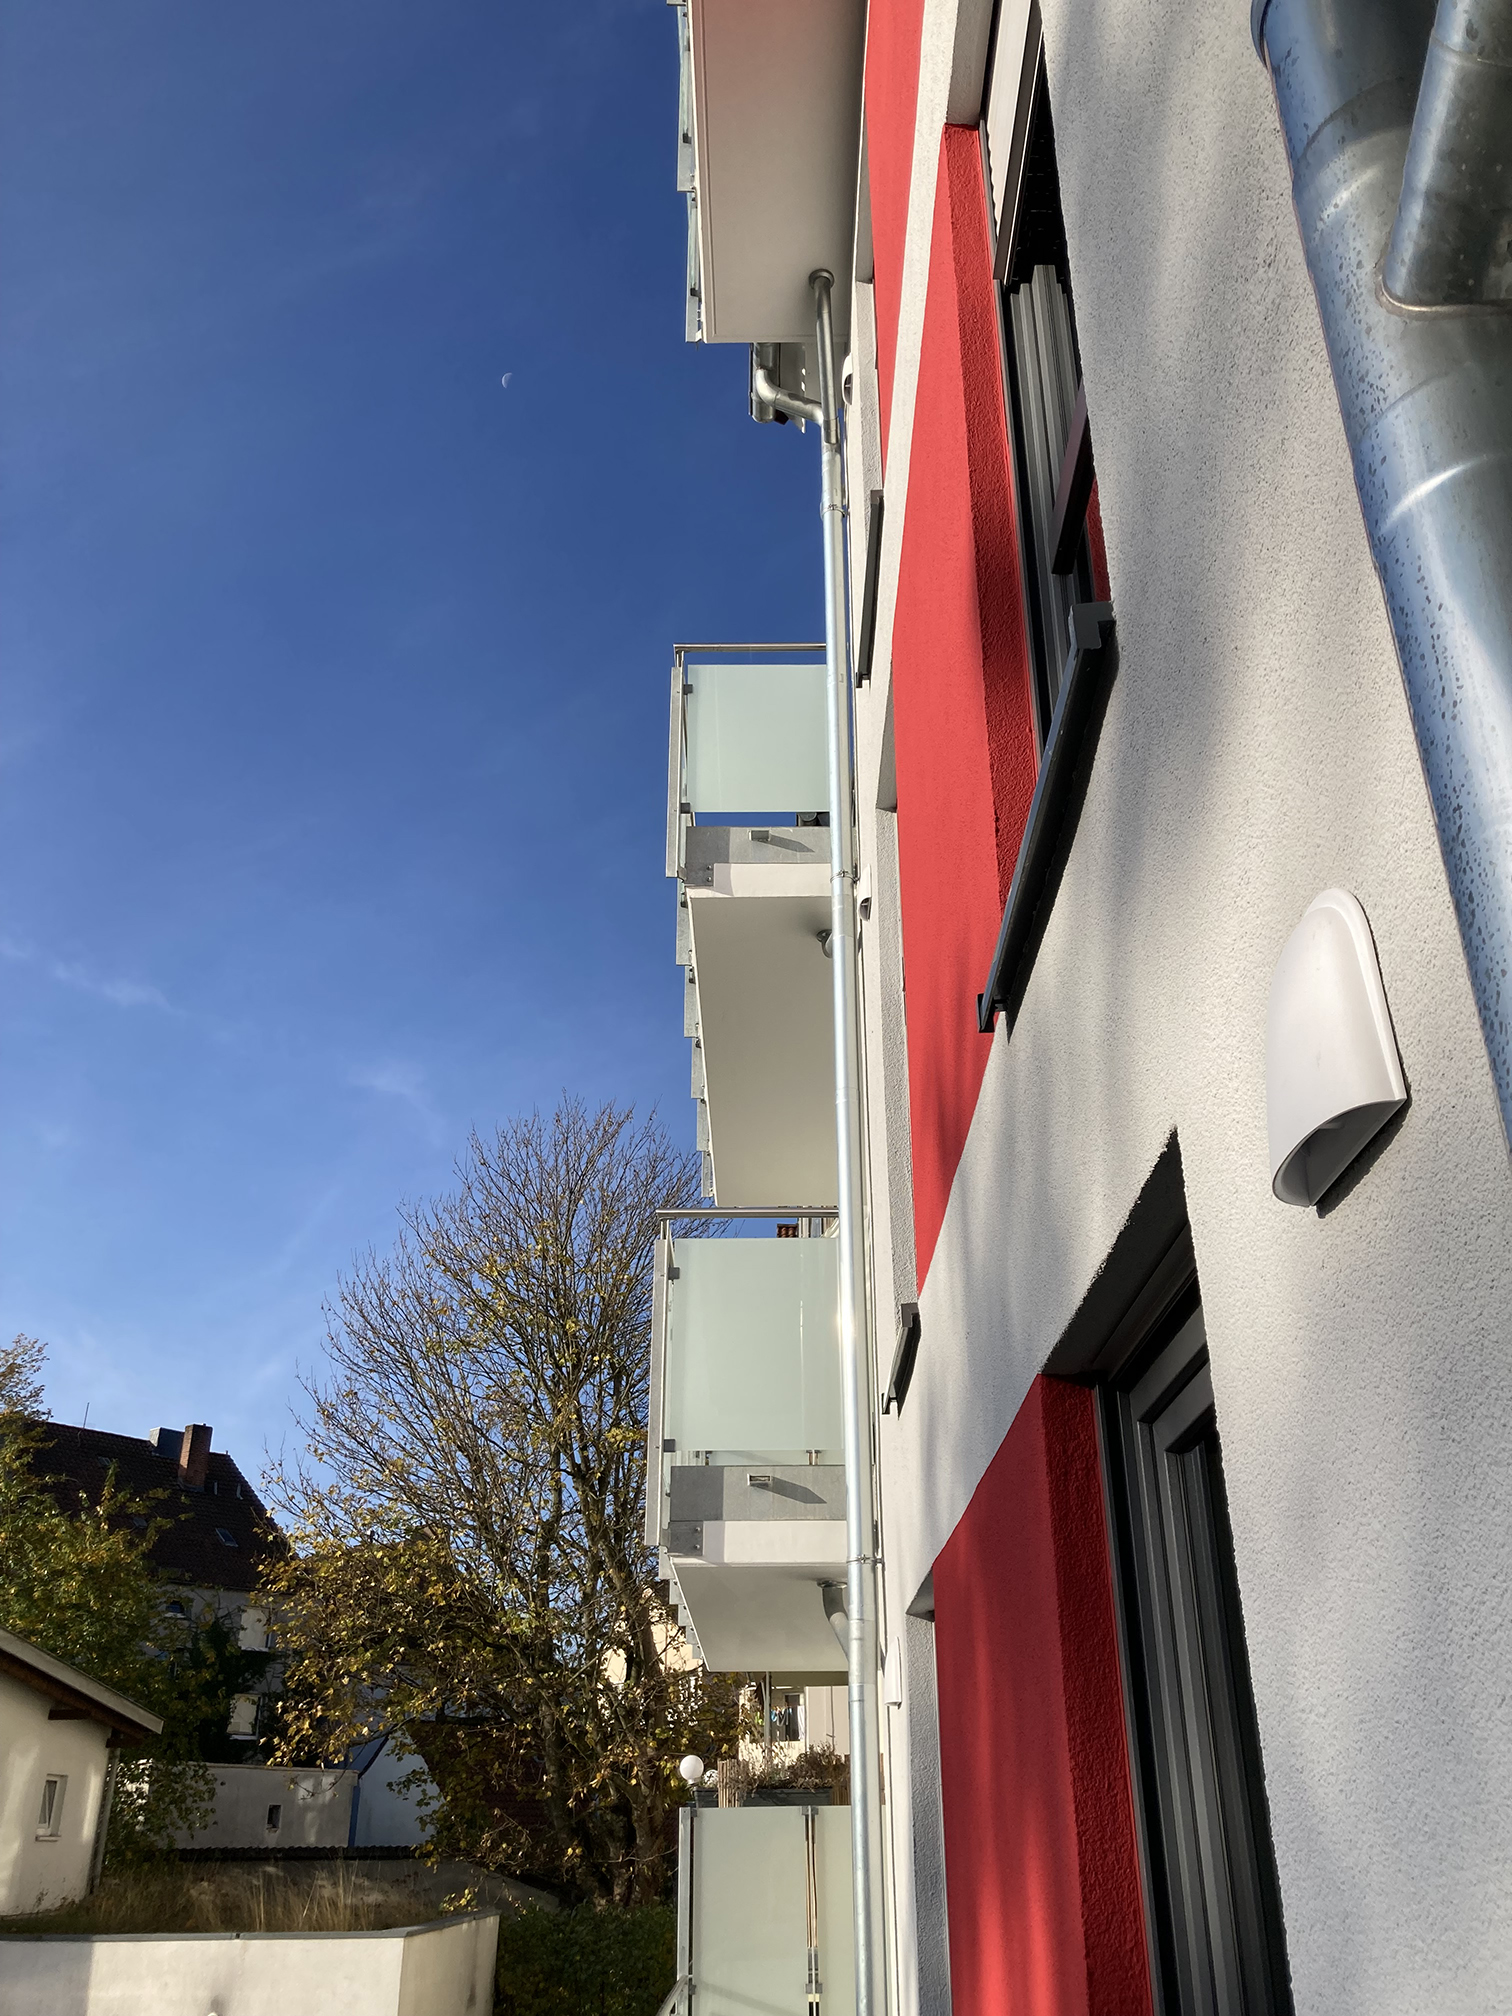 MFH-Nachhaltigkeit-Osnabrueck-Balkone-5-rueck-Planconcept-small